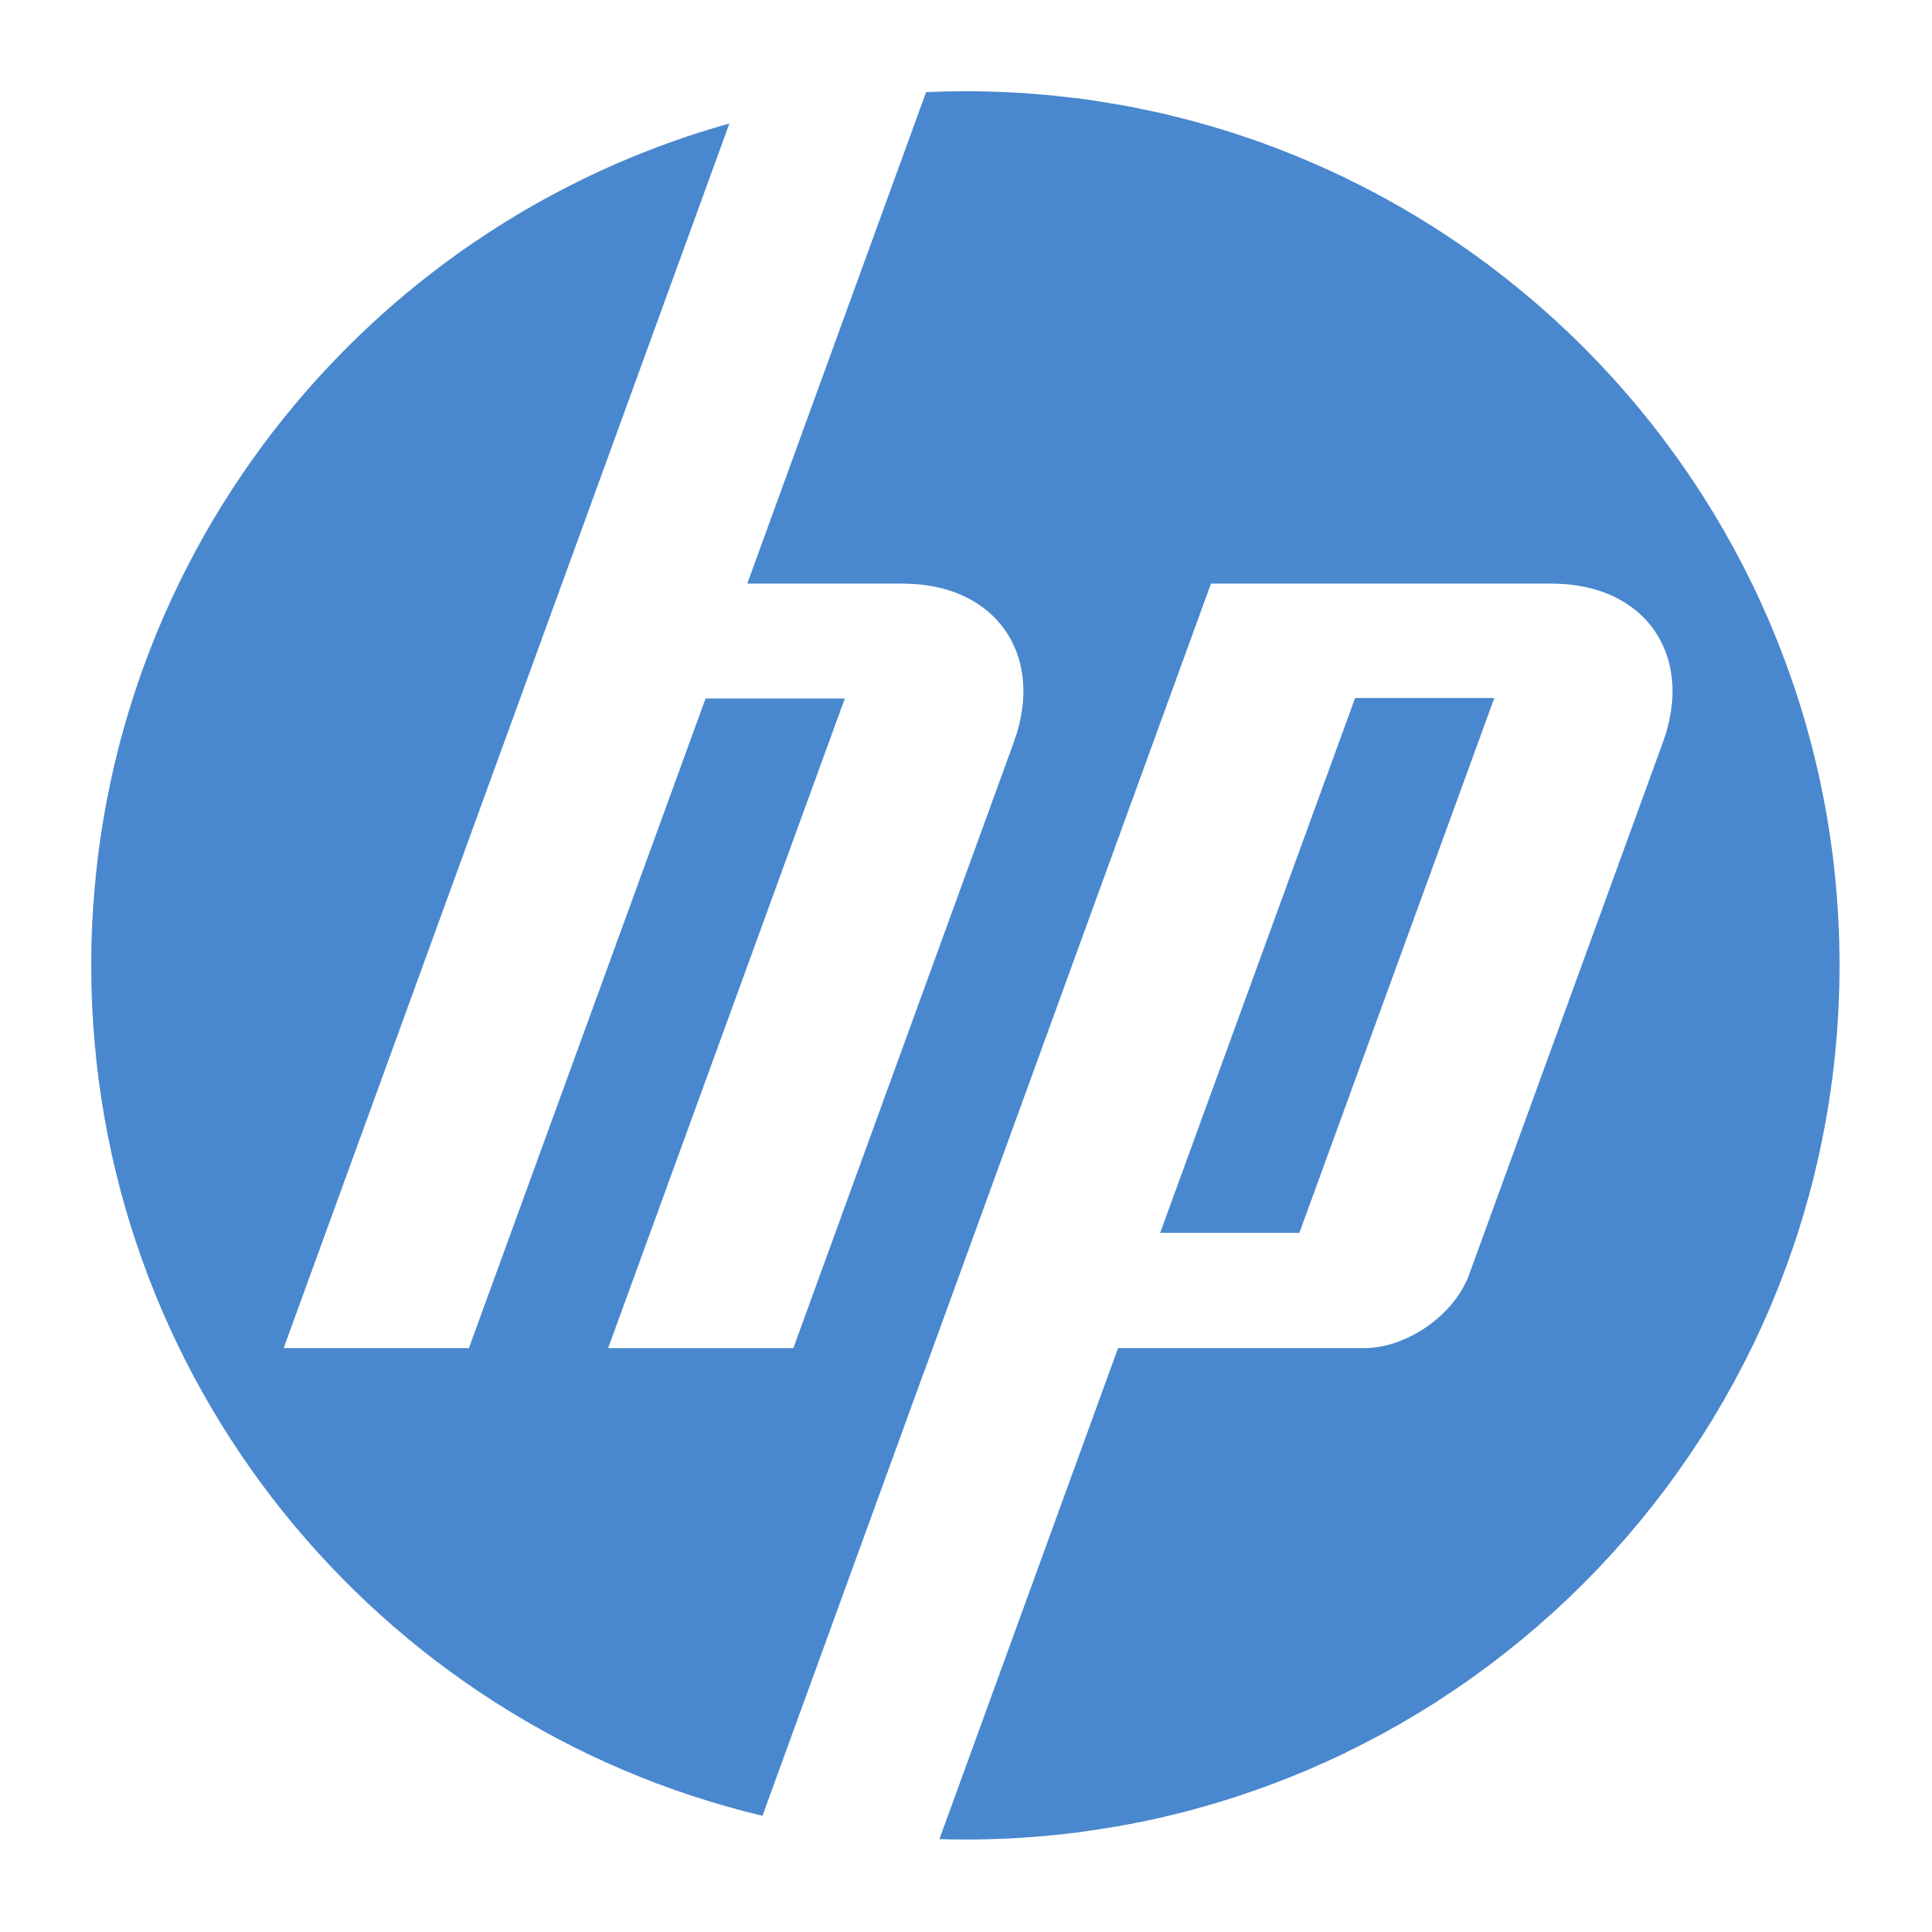 HP Intel Logo - HP Logo, Hewlett Packard Symbol Meaning, History And Evolution